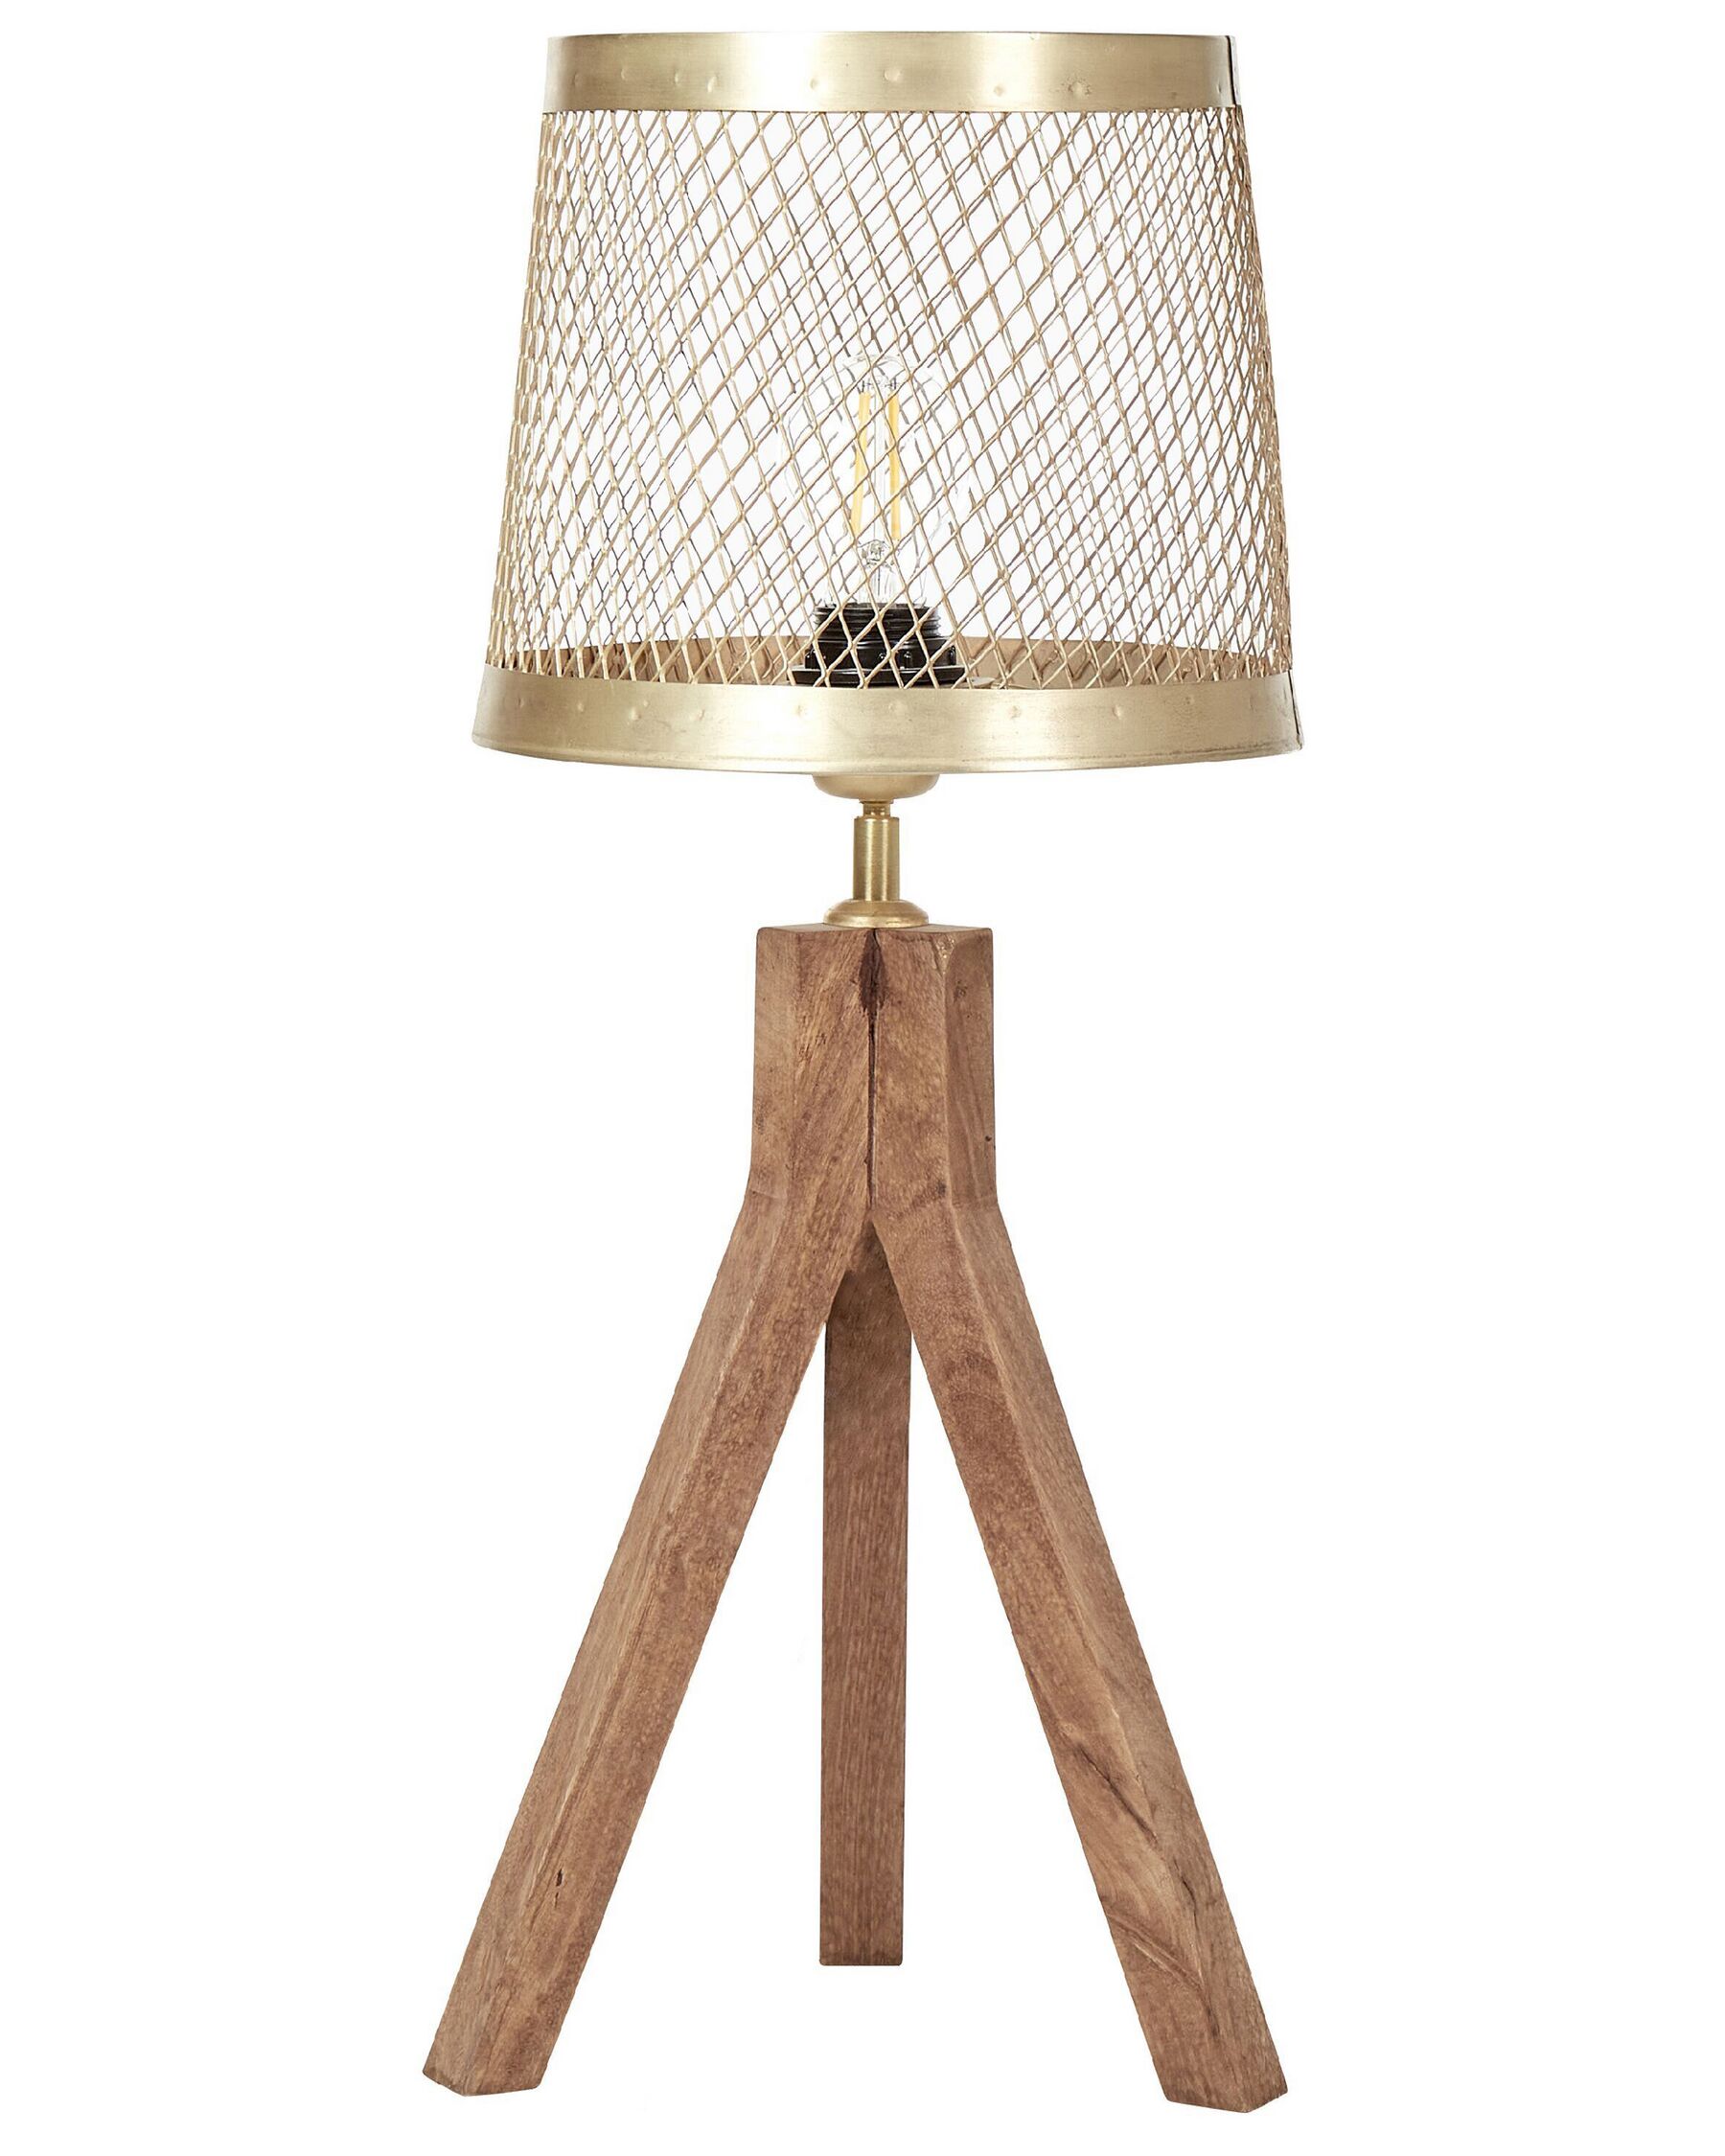 Mango Wood Table Lamp Dark and Brass BEKI_868164